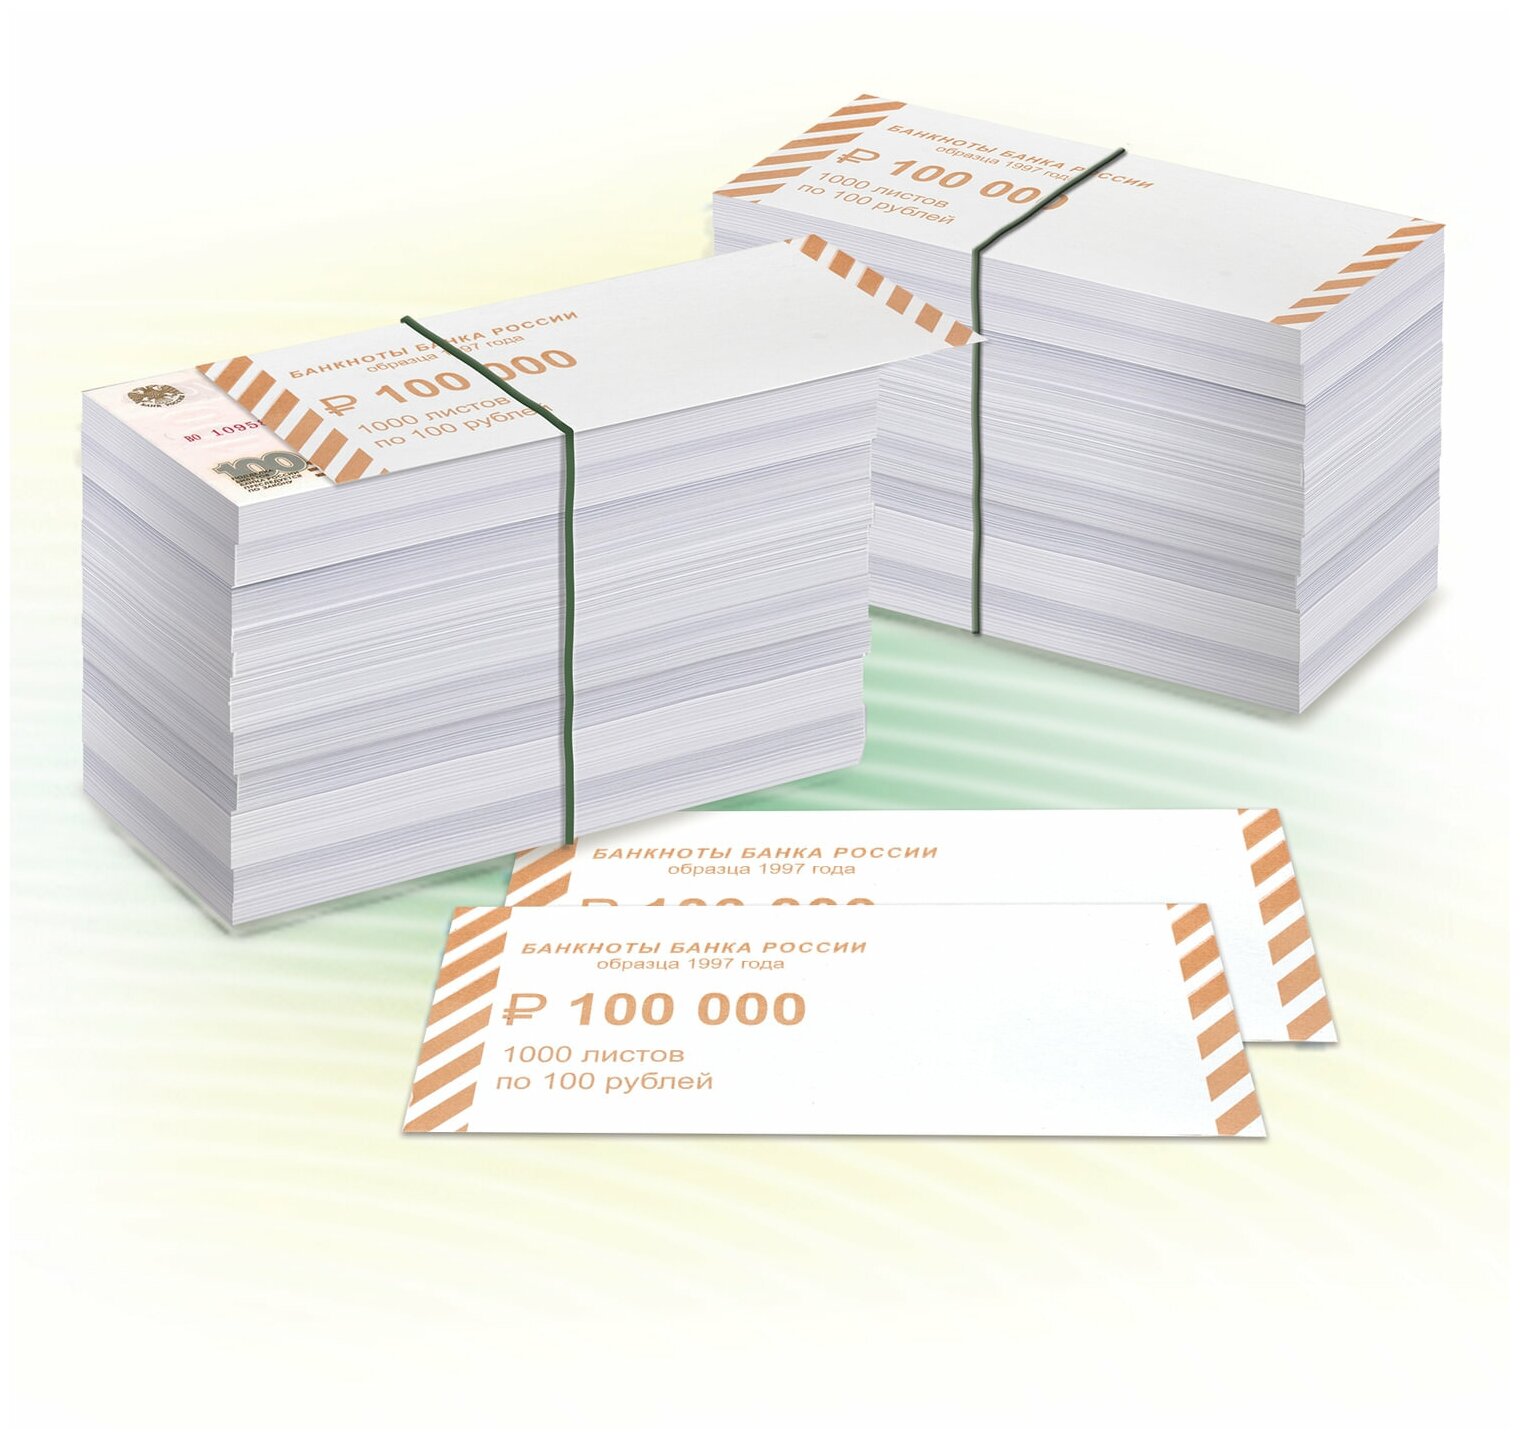 Накладки для упаковки корешков банкнот, комплект 2000 шт, номинал 100 руб. В наборе: 1компл.